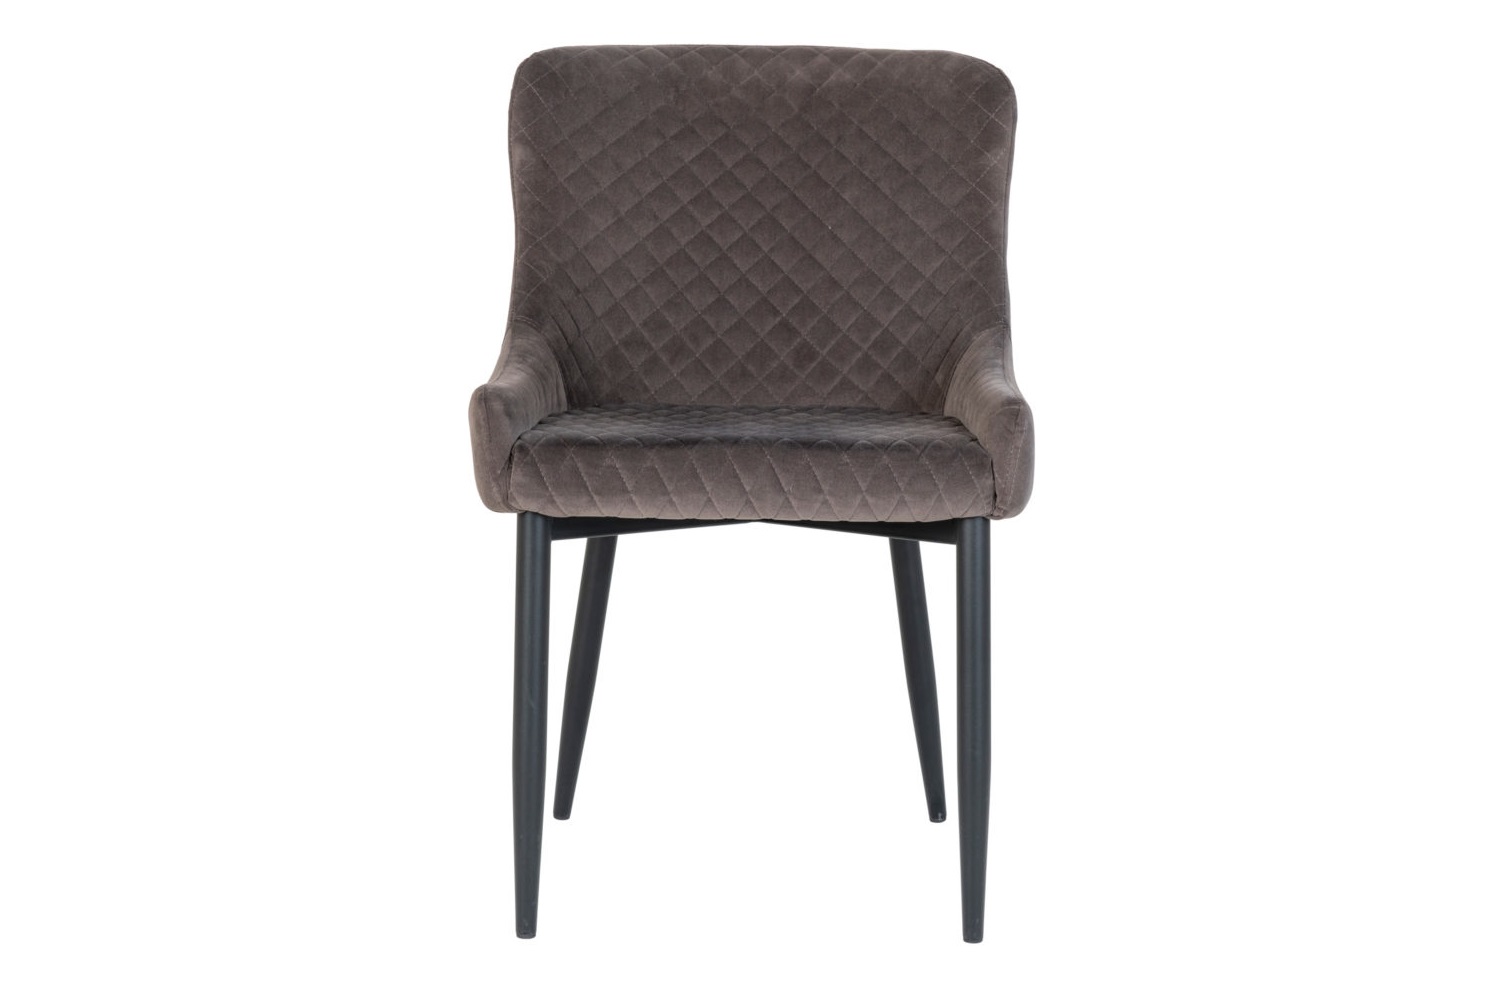 Designová židle Lapid tmavě šedý samet